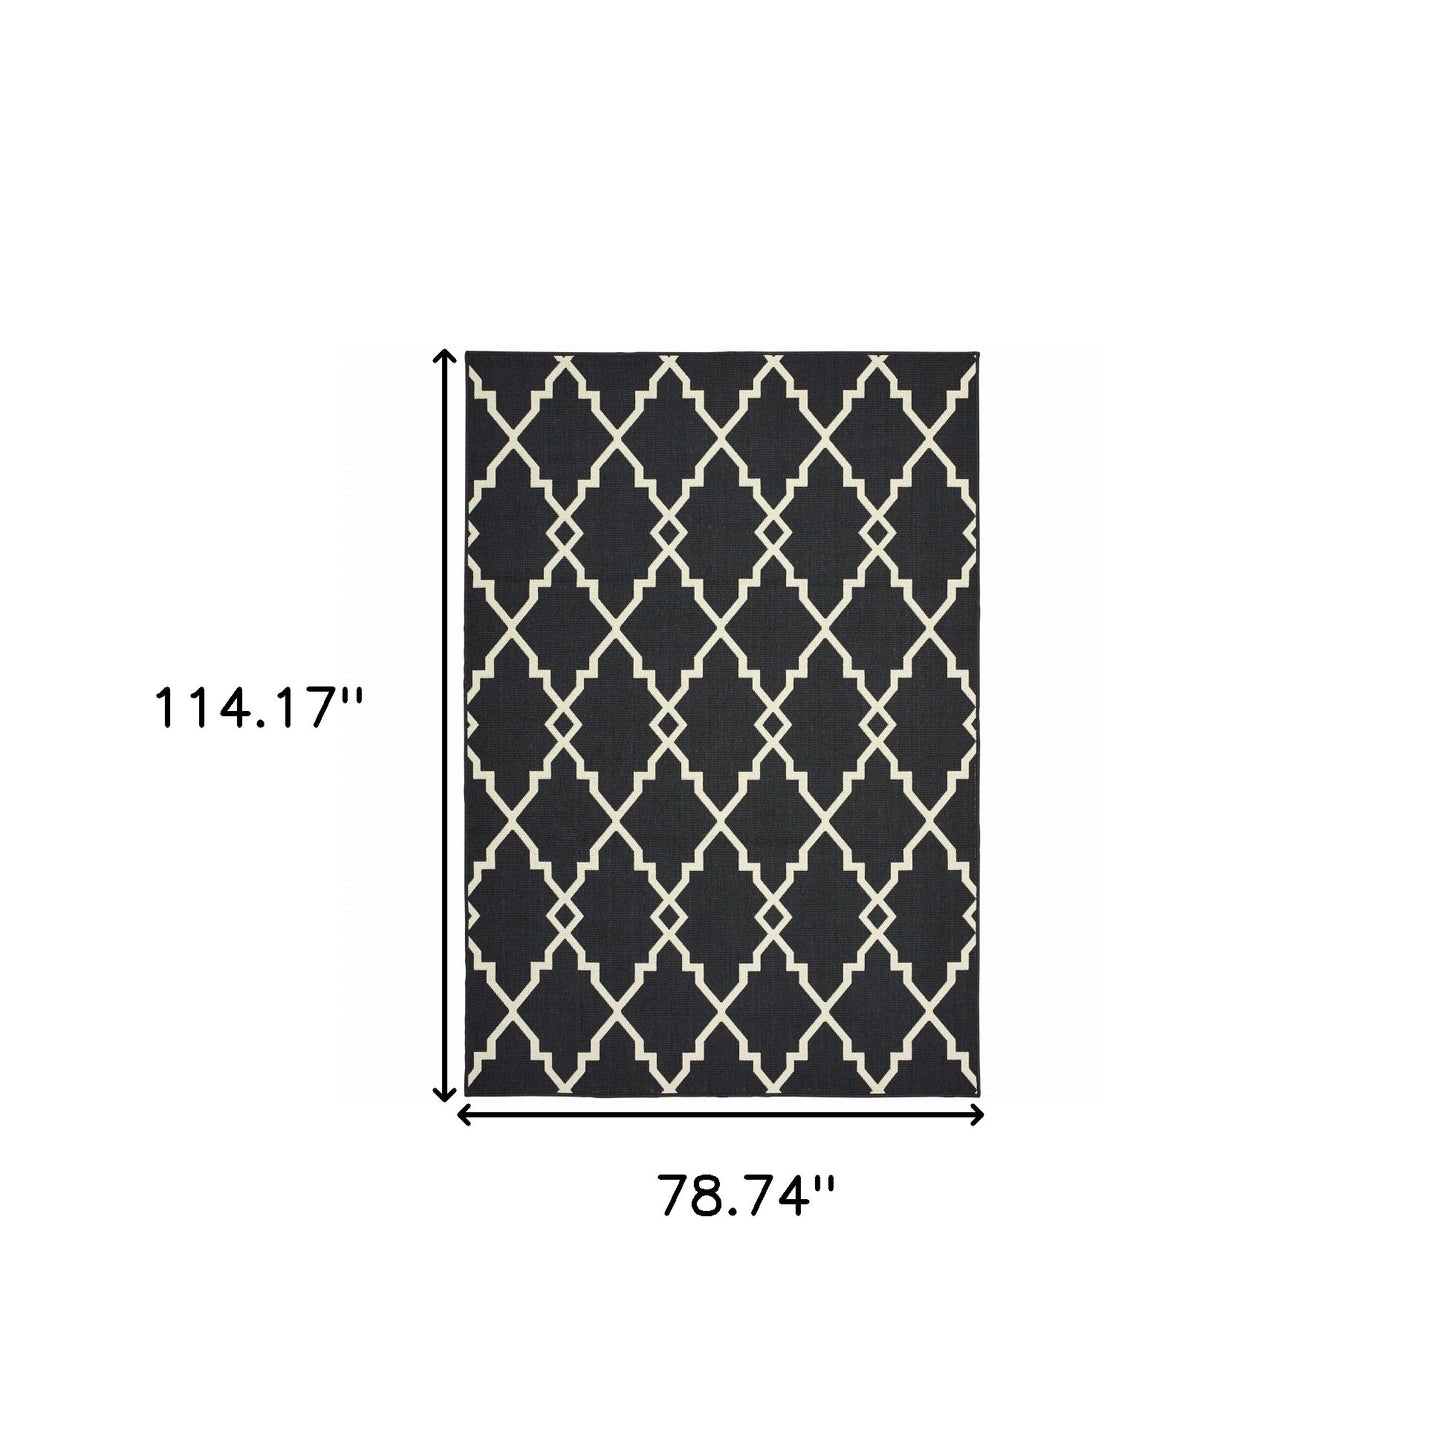 4' x 6' Black and Ivory Indoor Outdoor Area Rug